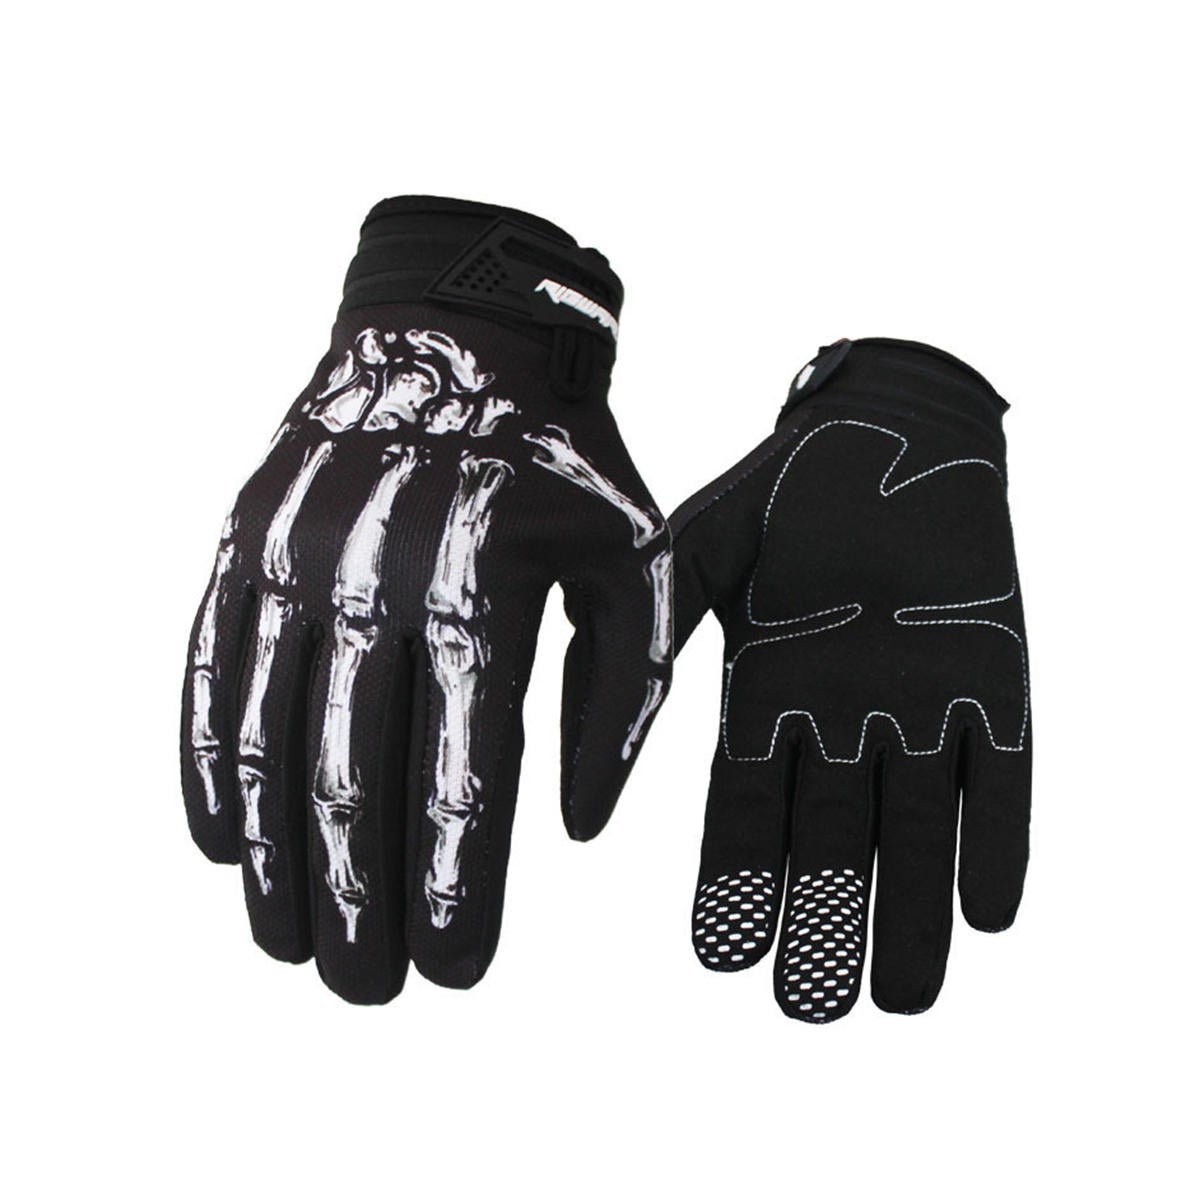 1 pair Unisex Warm Windproof Winter Motorcycle Gloves Riding Running Bike Anti-slip Safety Work